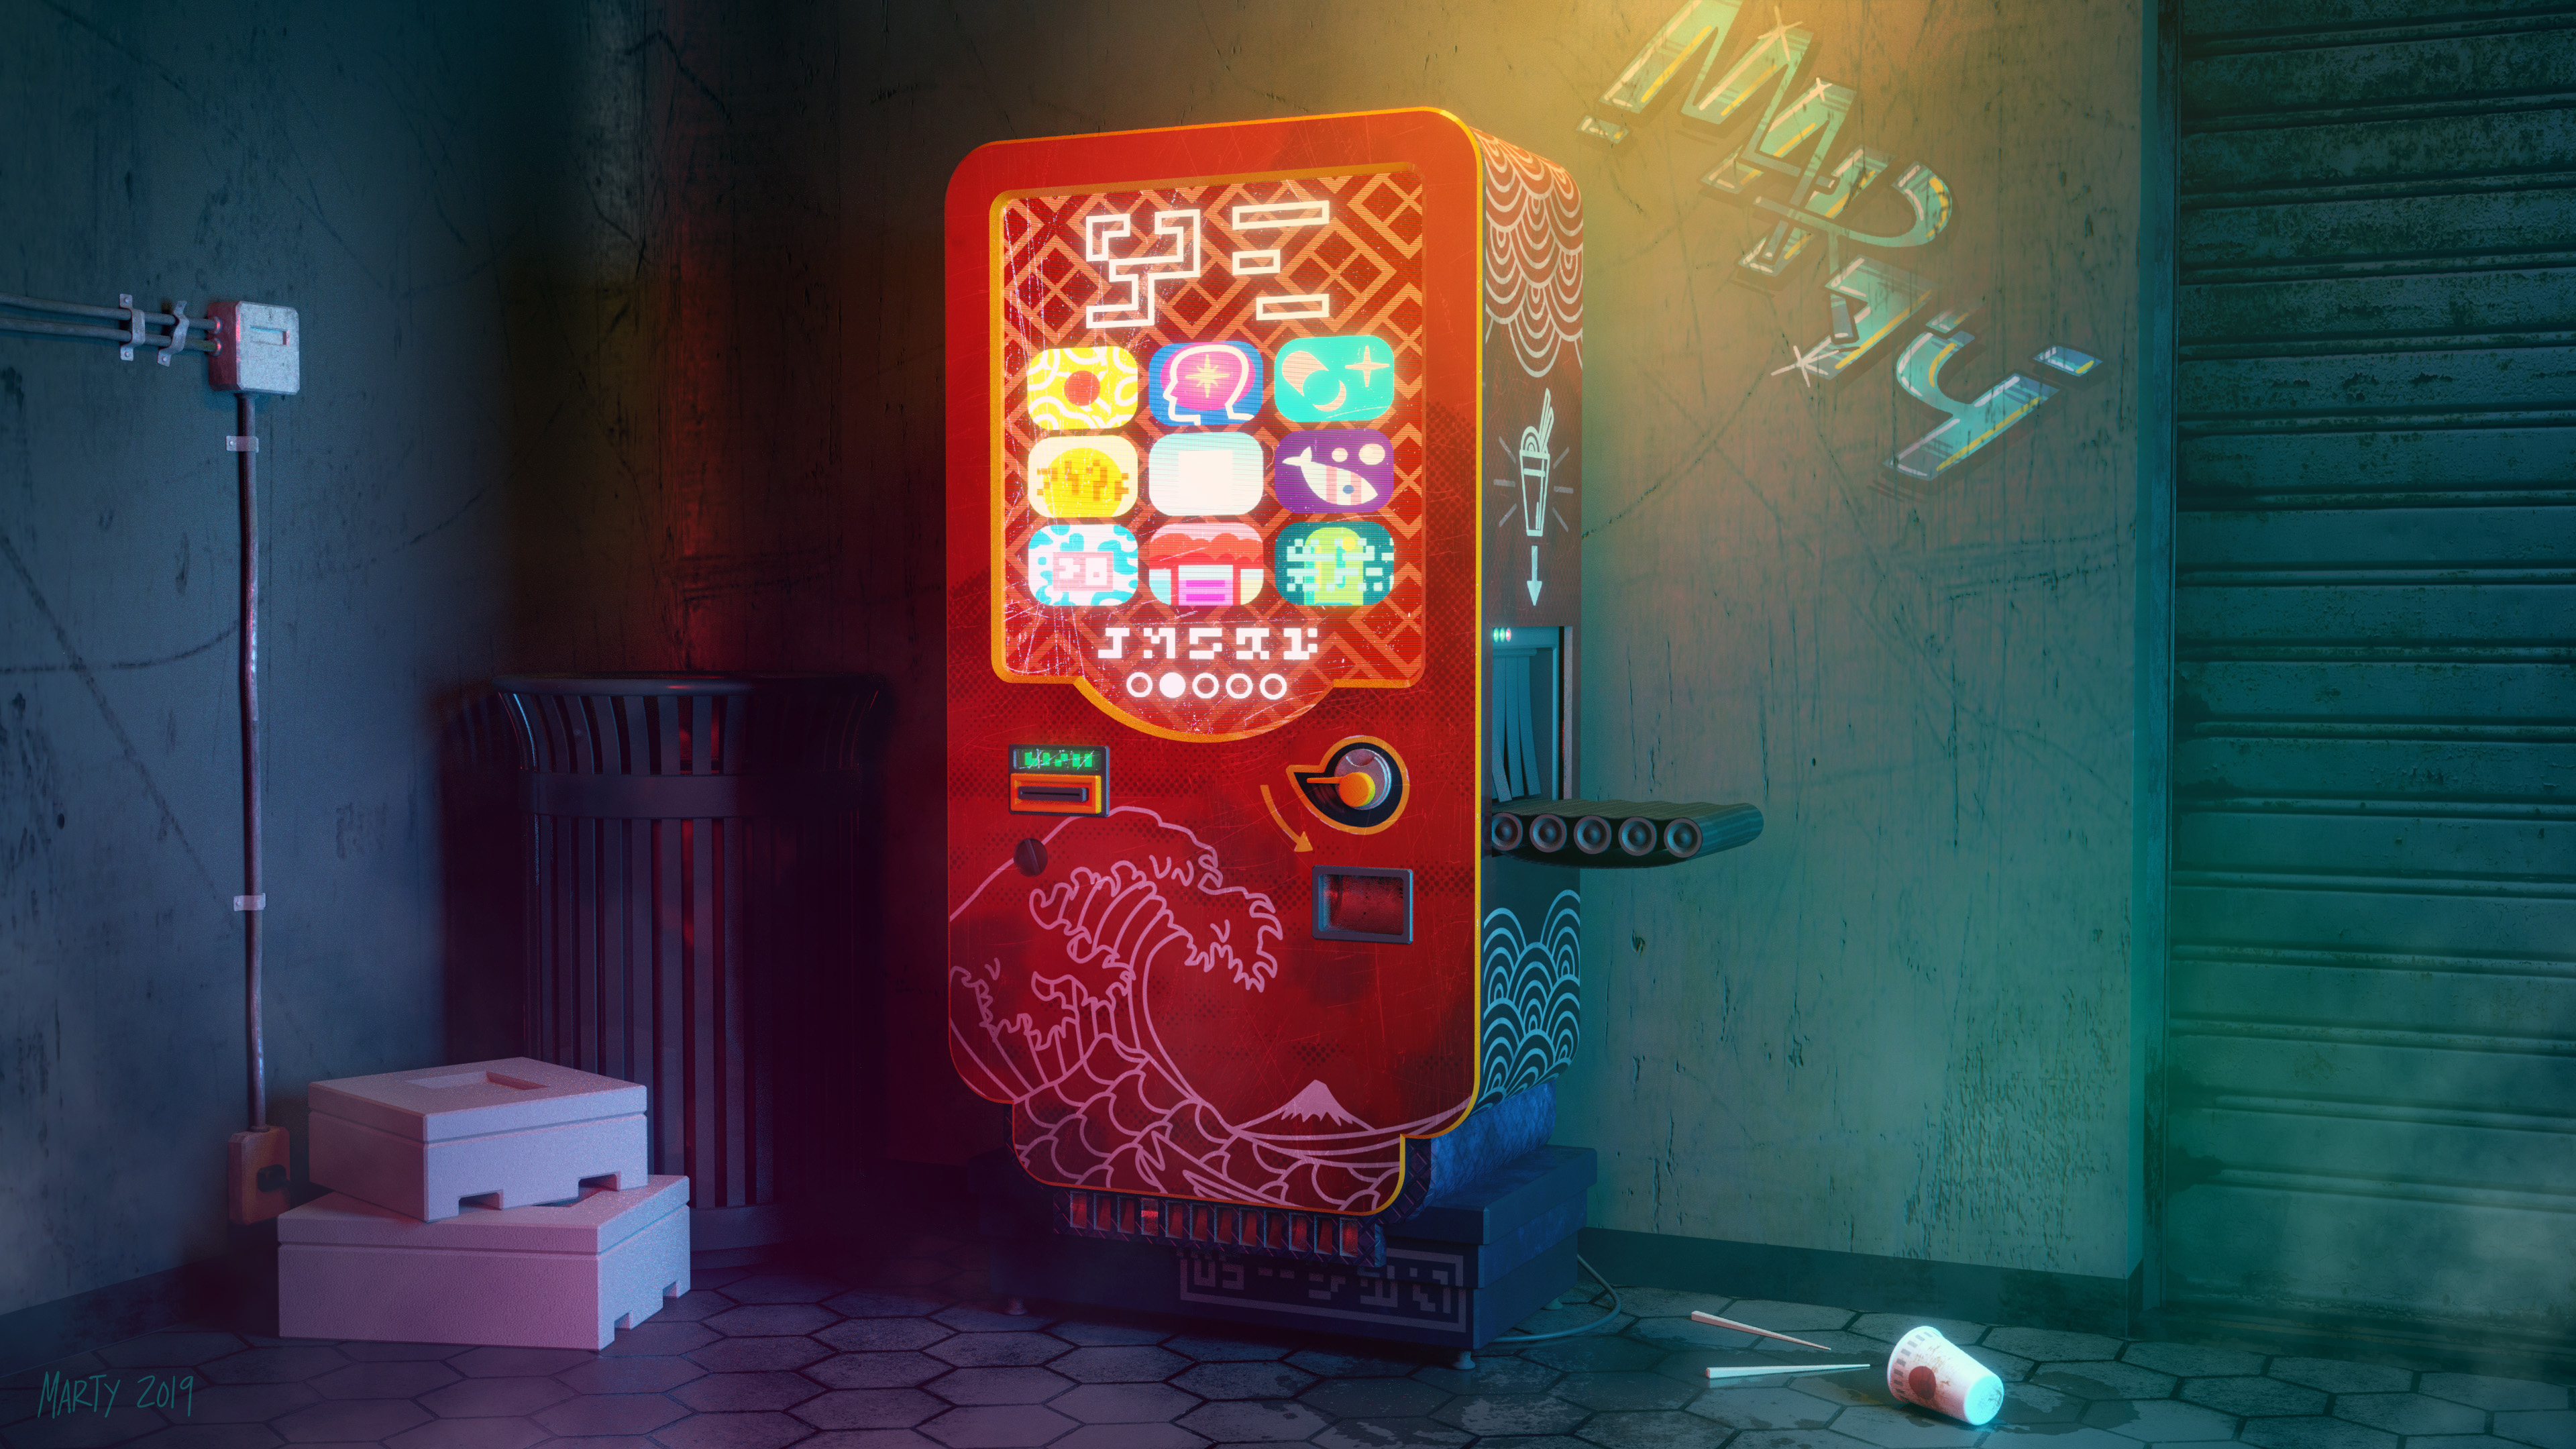 2. Nail Art Vending Machine - Alibaba.com - wide 7